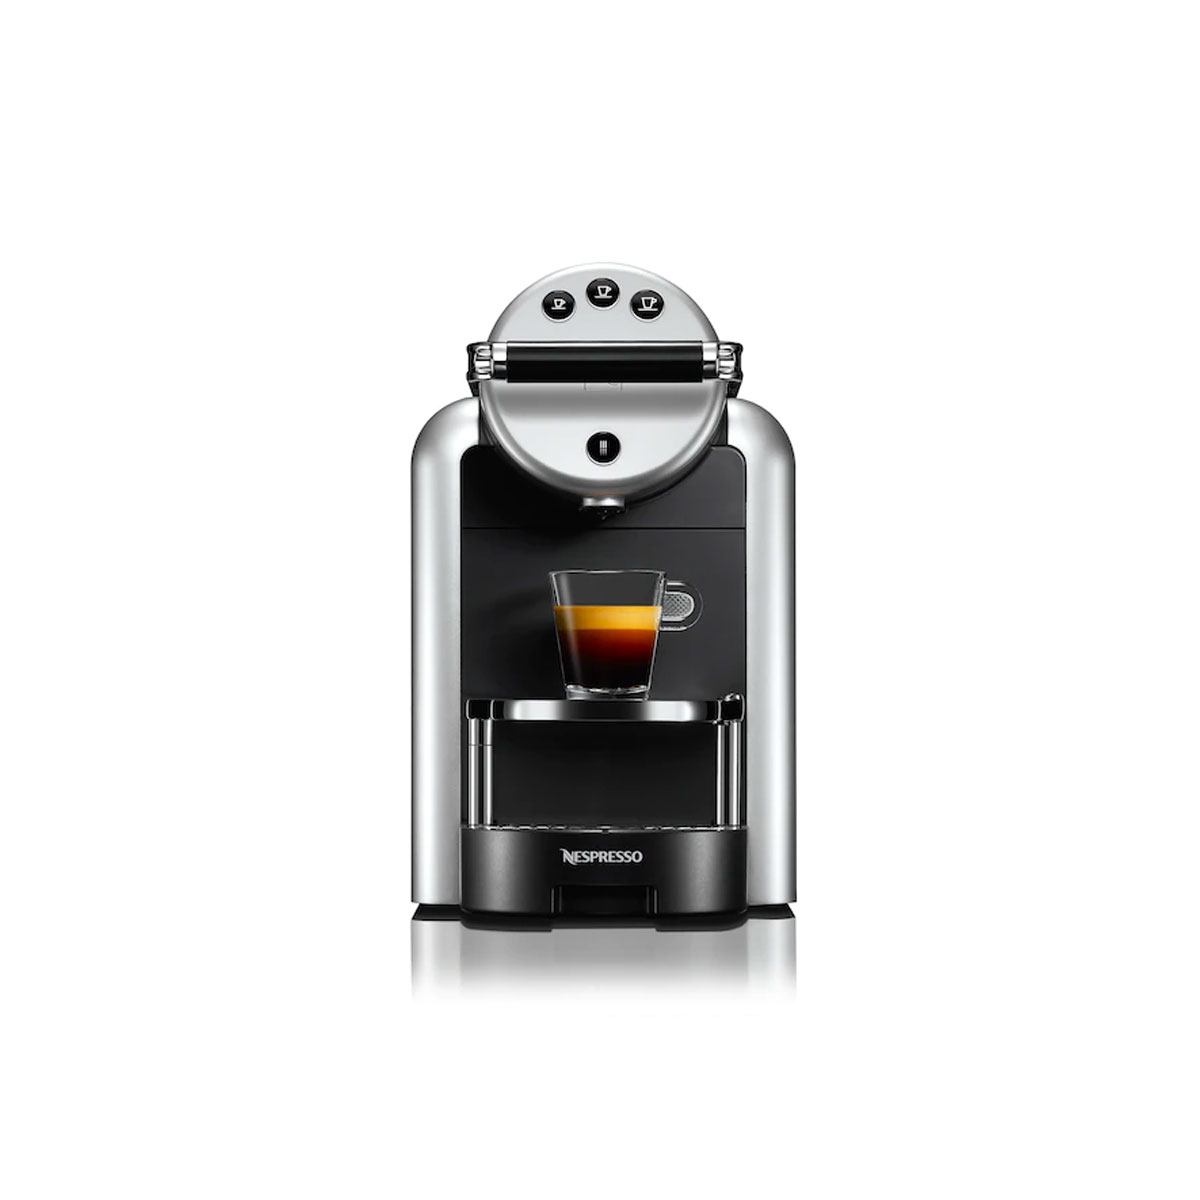 Nespresso Zenius Espresso Coffee Machine – Servomax